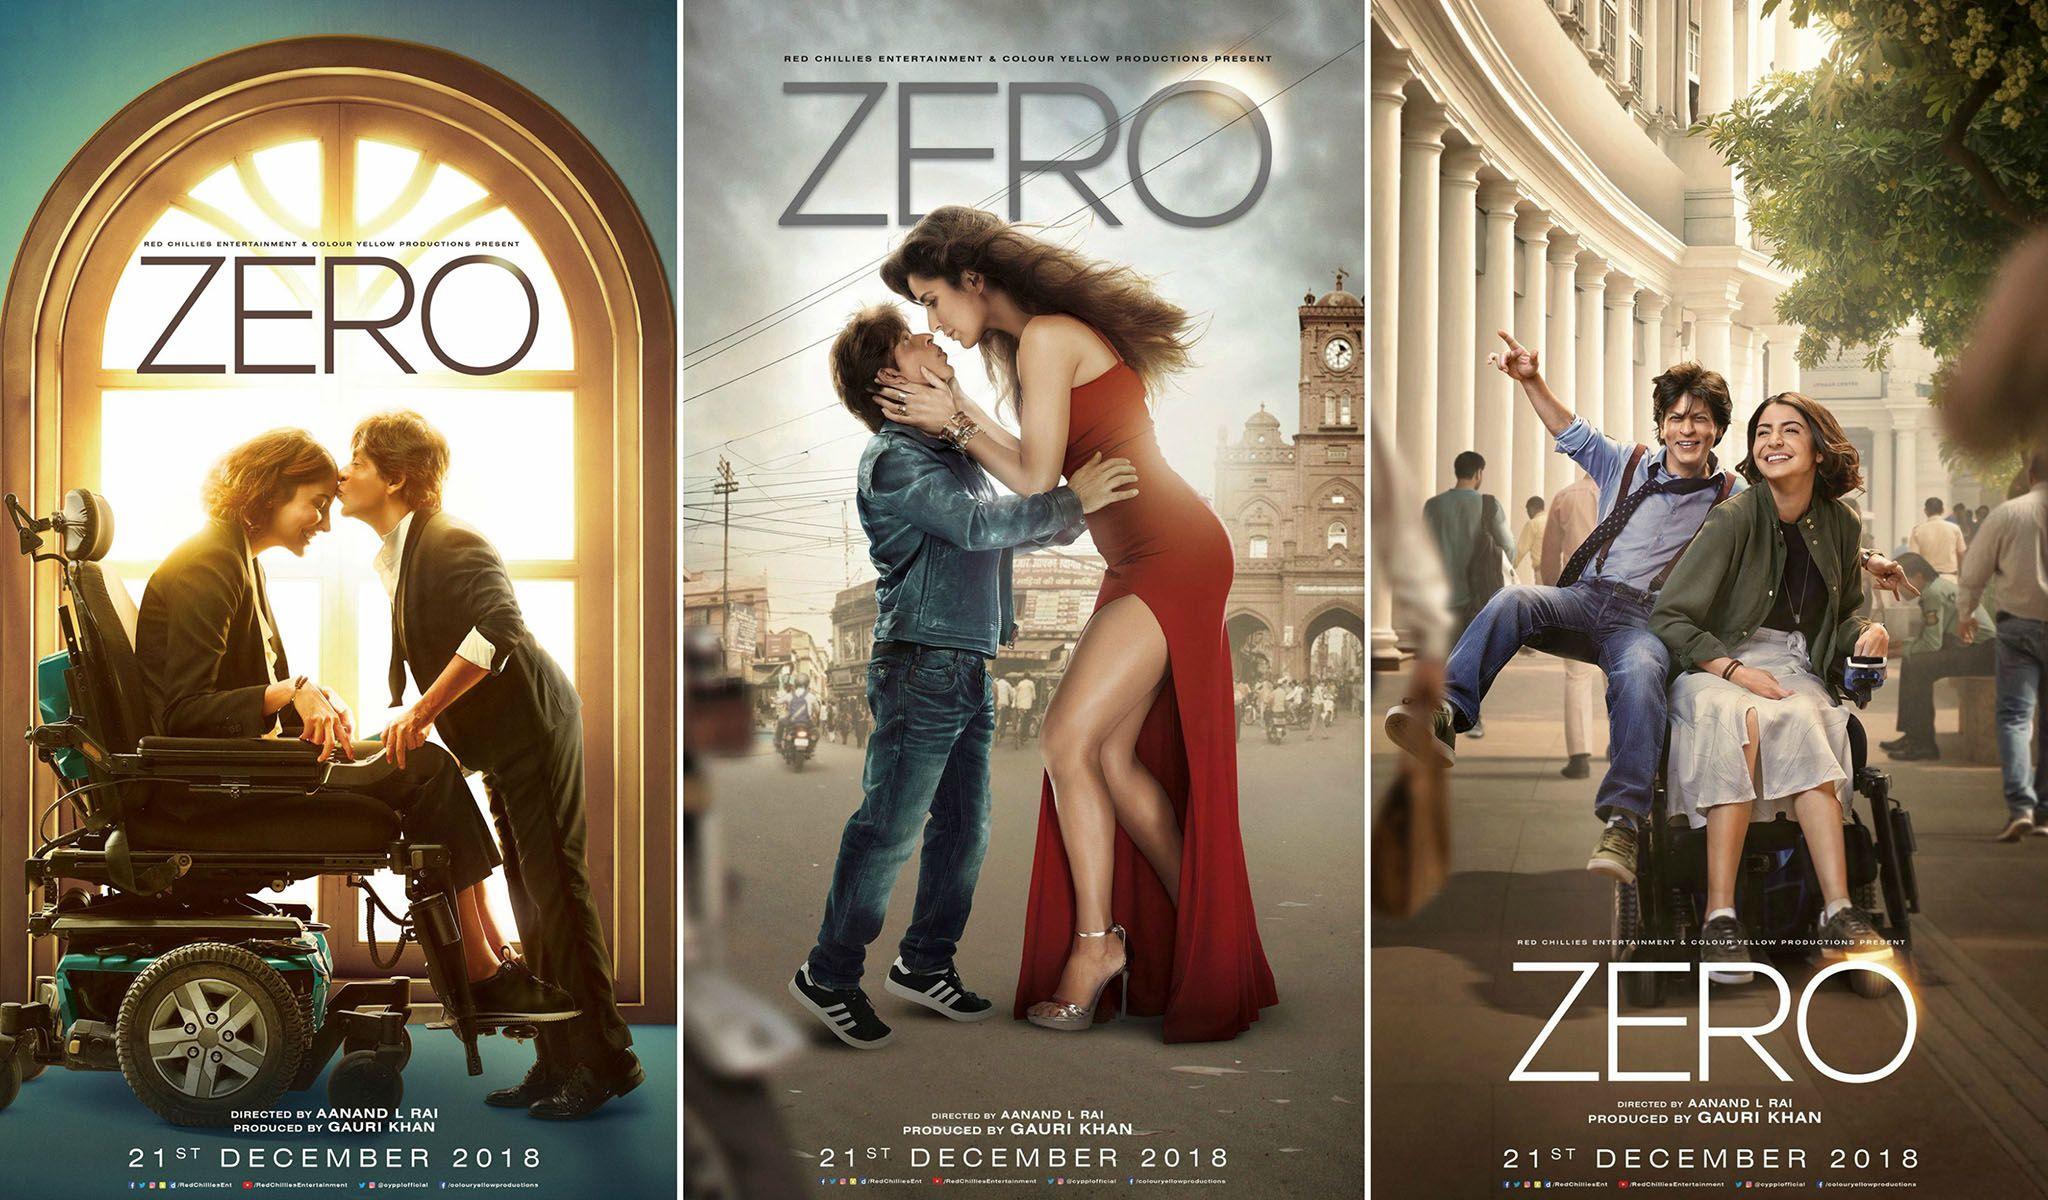 SRK Zero Movie Wallpaper For Mobile. Movie wallpaper, Mobile wallpaper, Movies